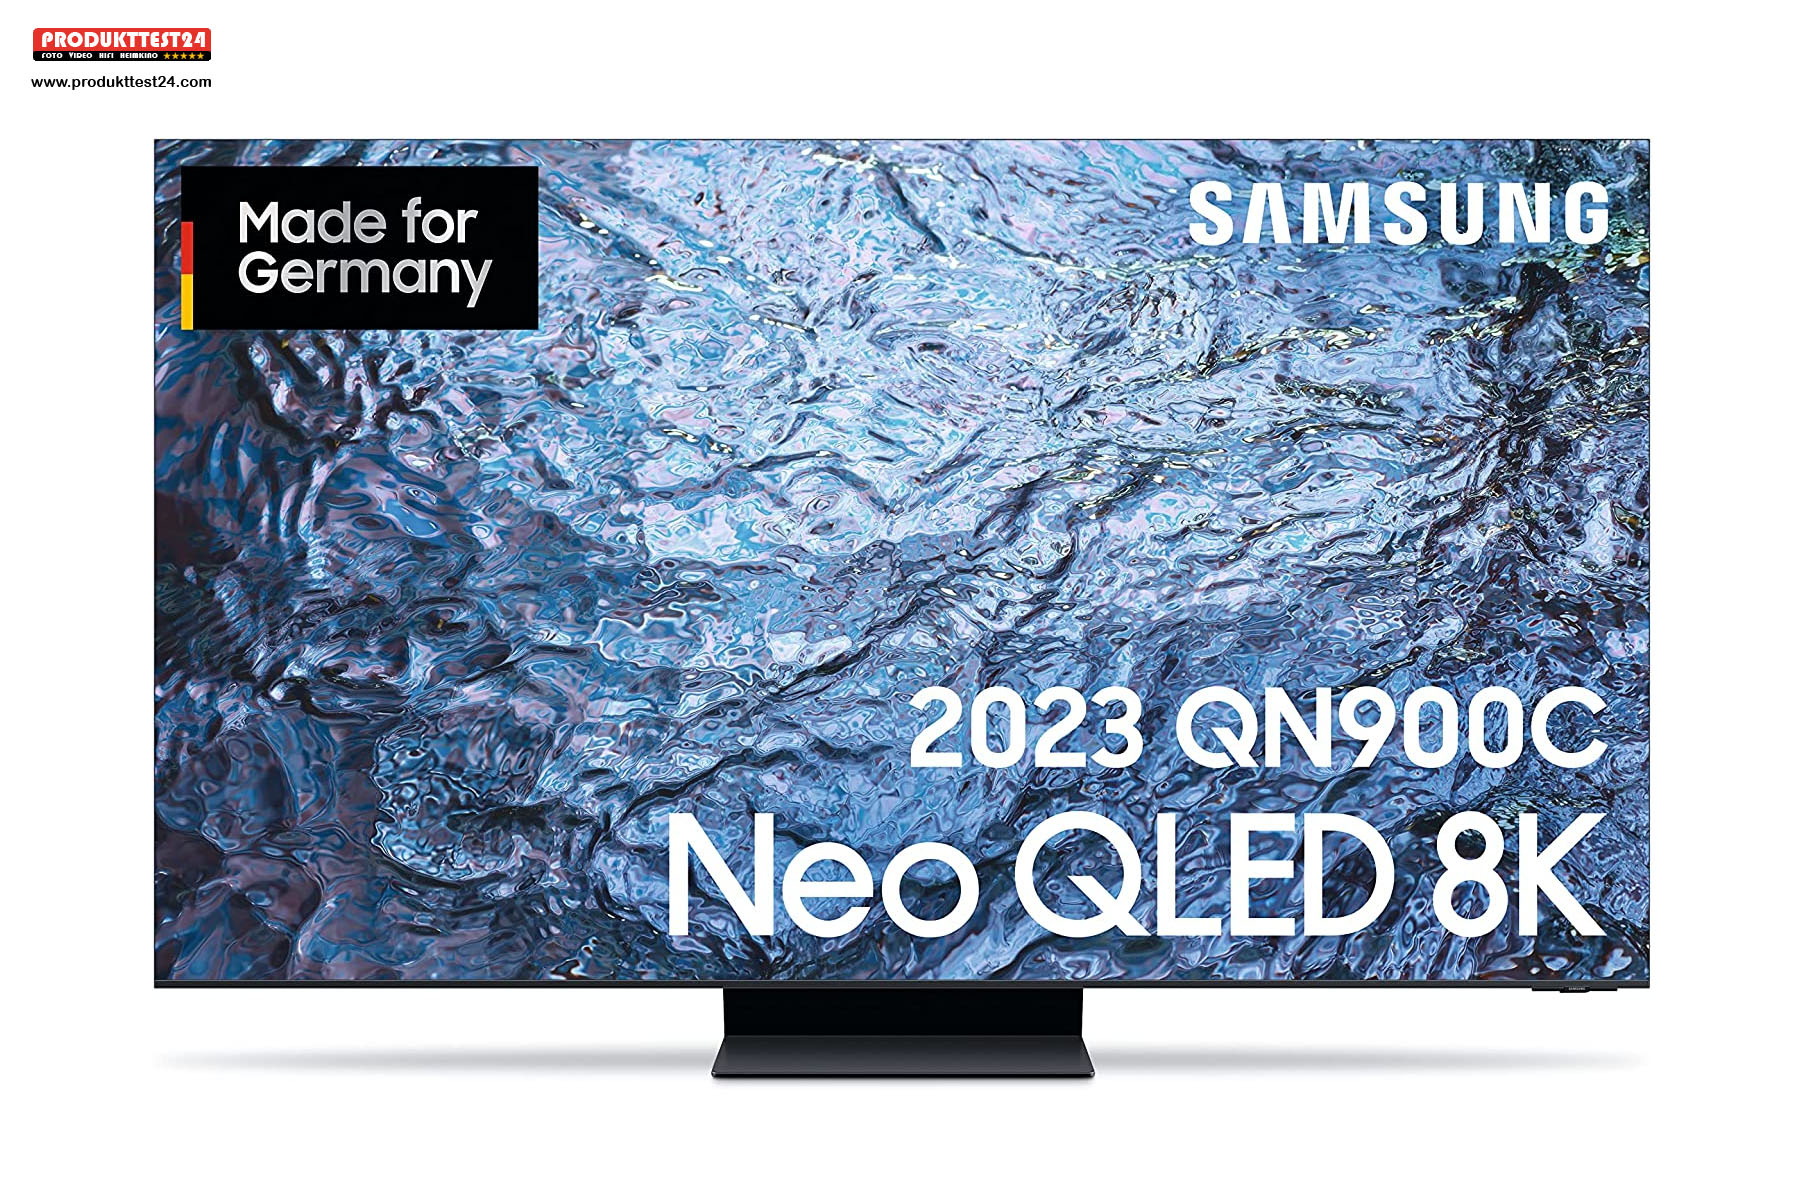 Samsung GQ75QN900C Neo QLED 8K-Fernseher mit 75 Zoll Bilddiagonale